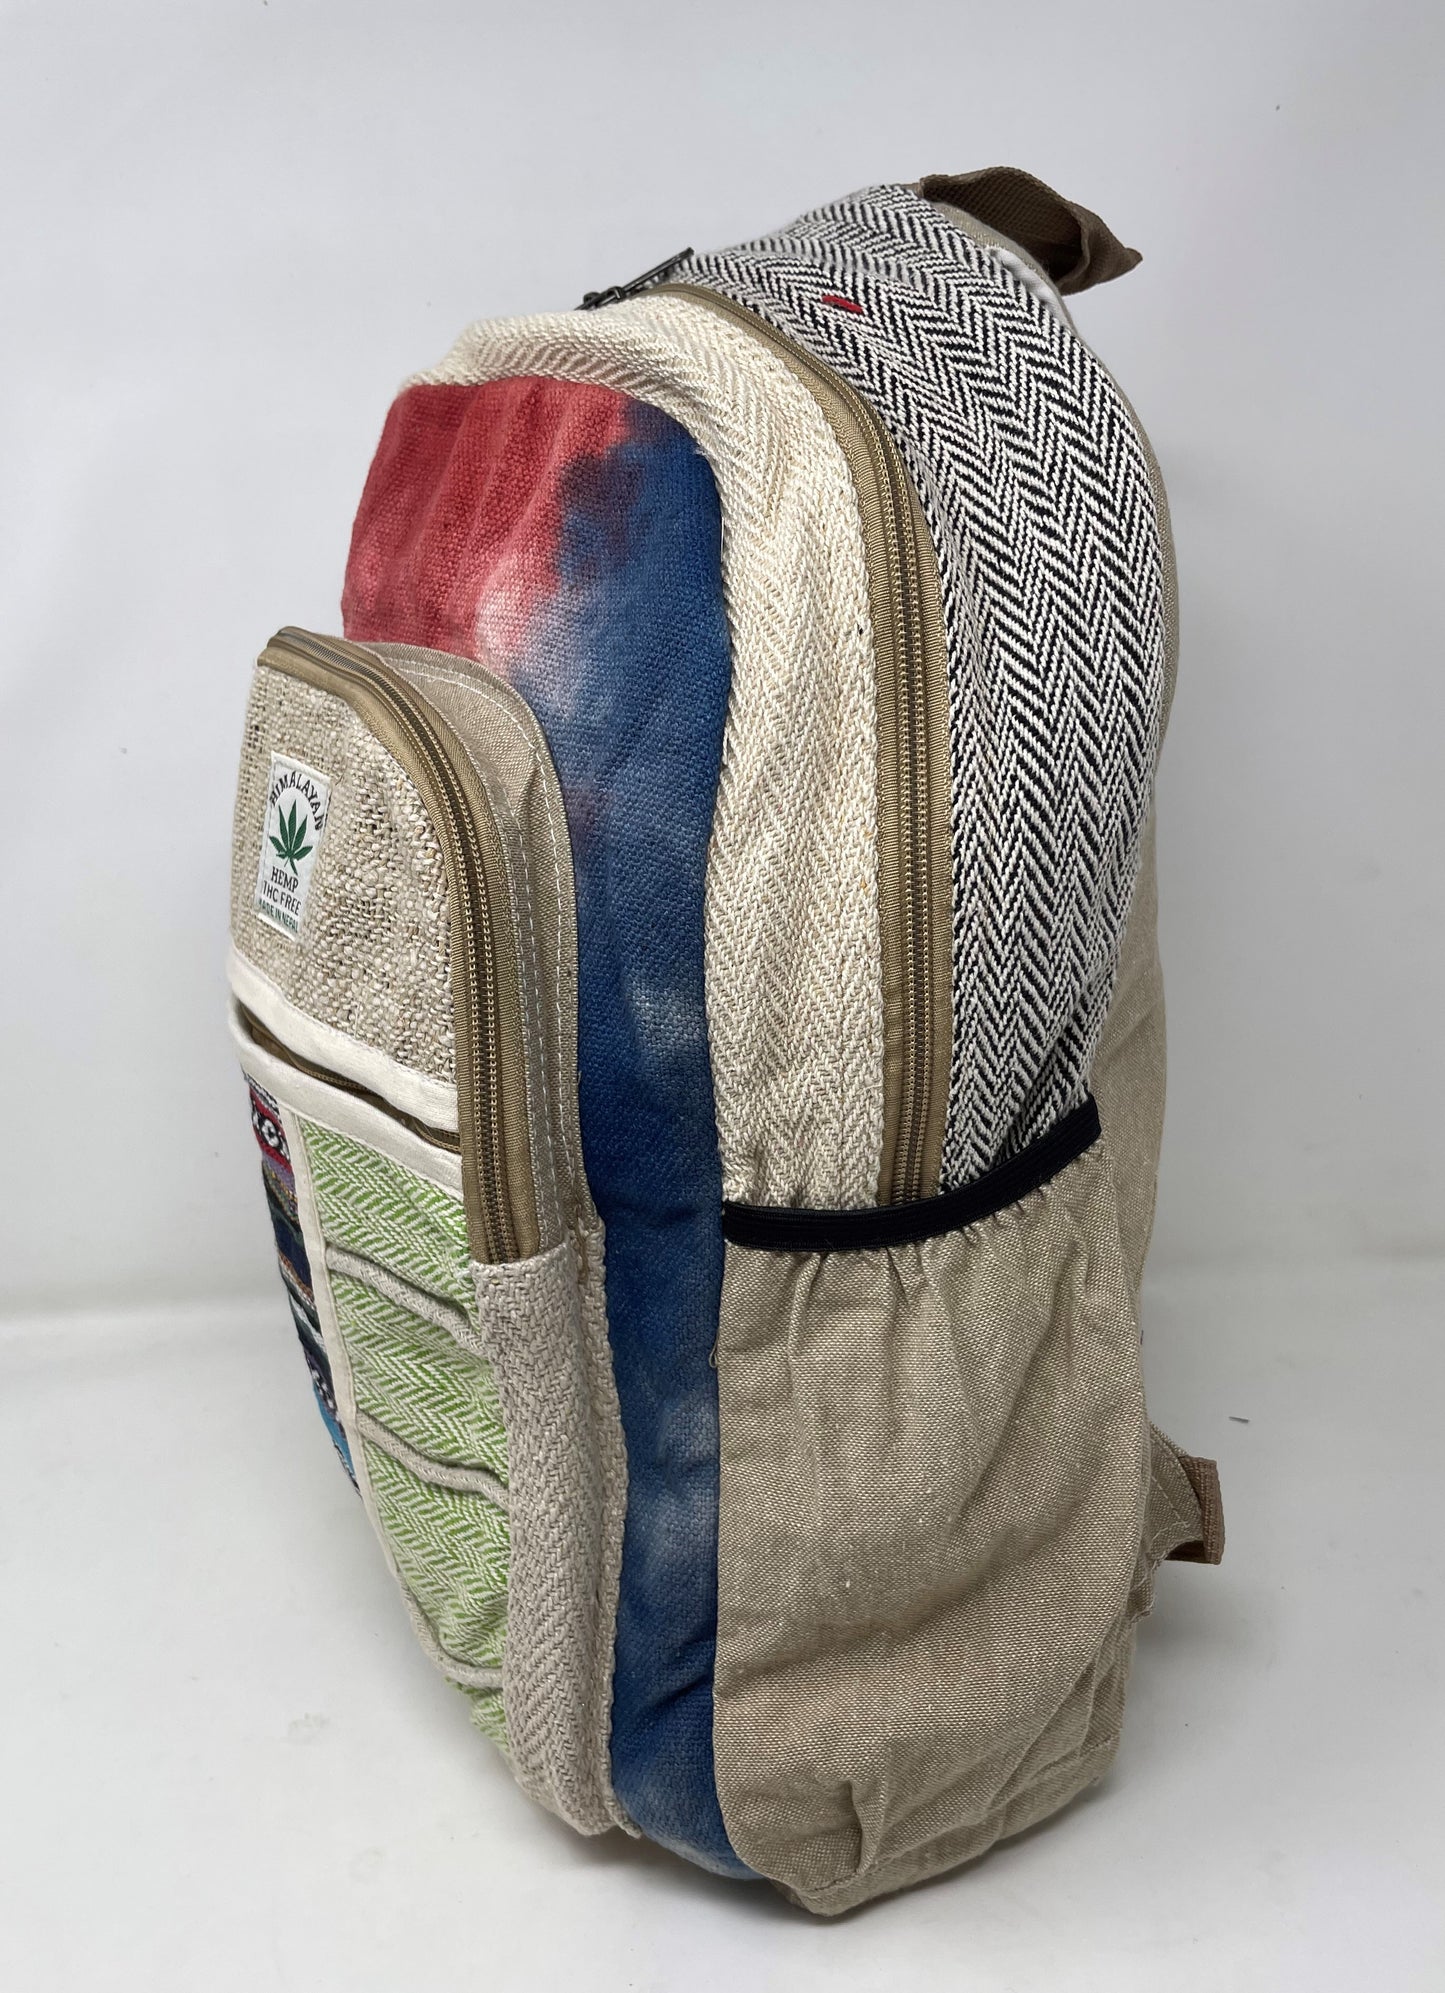 Unique 100% Himalaya Hemp Backpack Hippie Backpack w/Laptop Sleeve